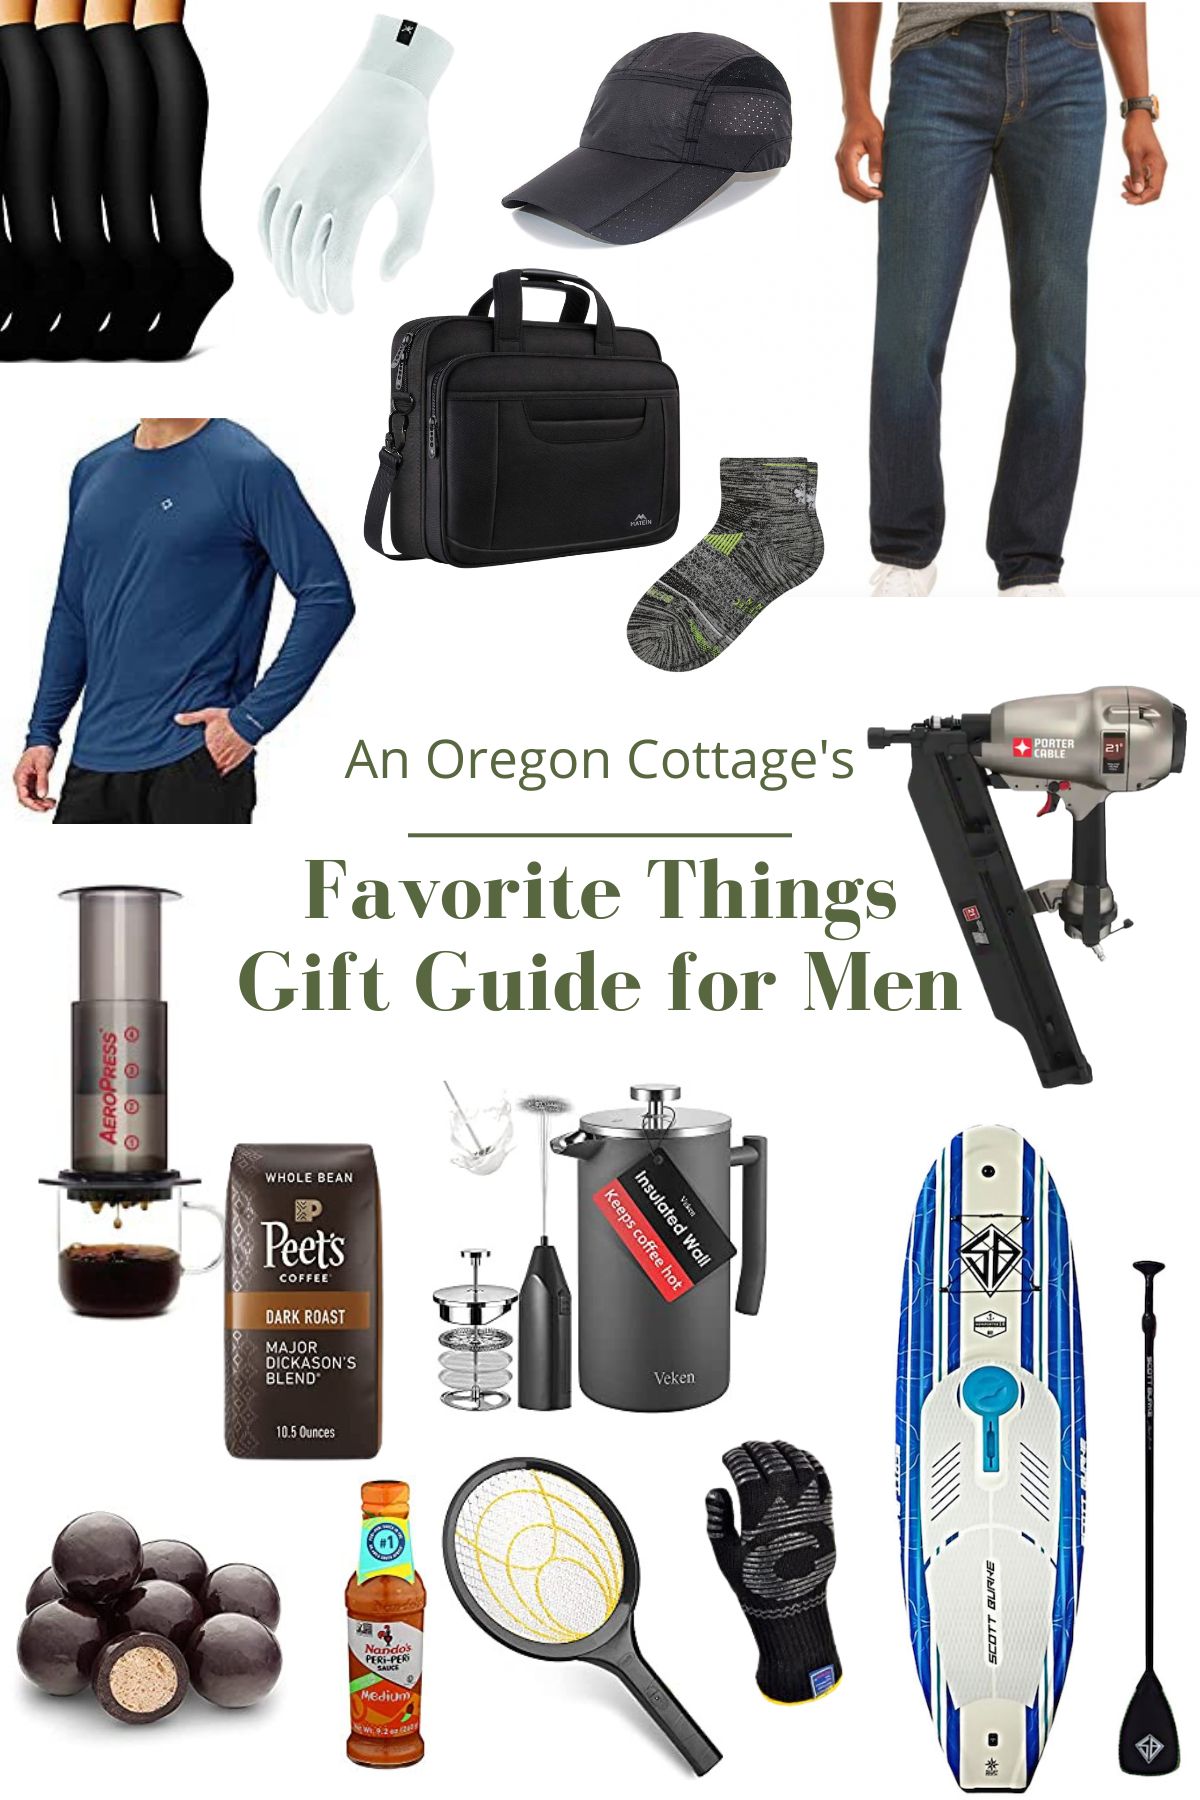 Favorite Things Gift Guide-Men items